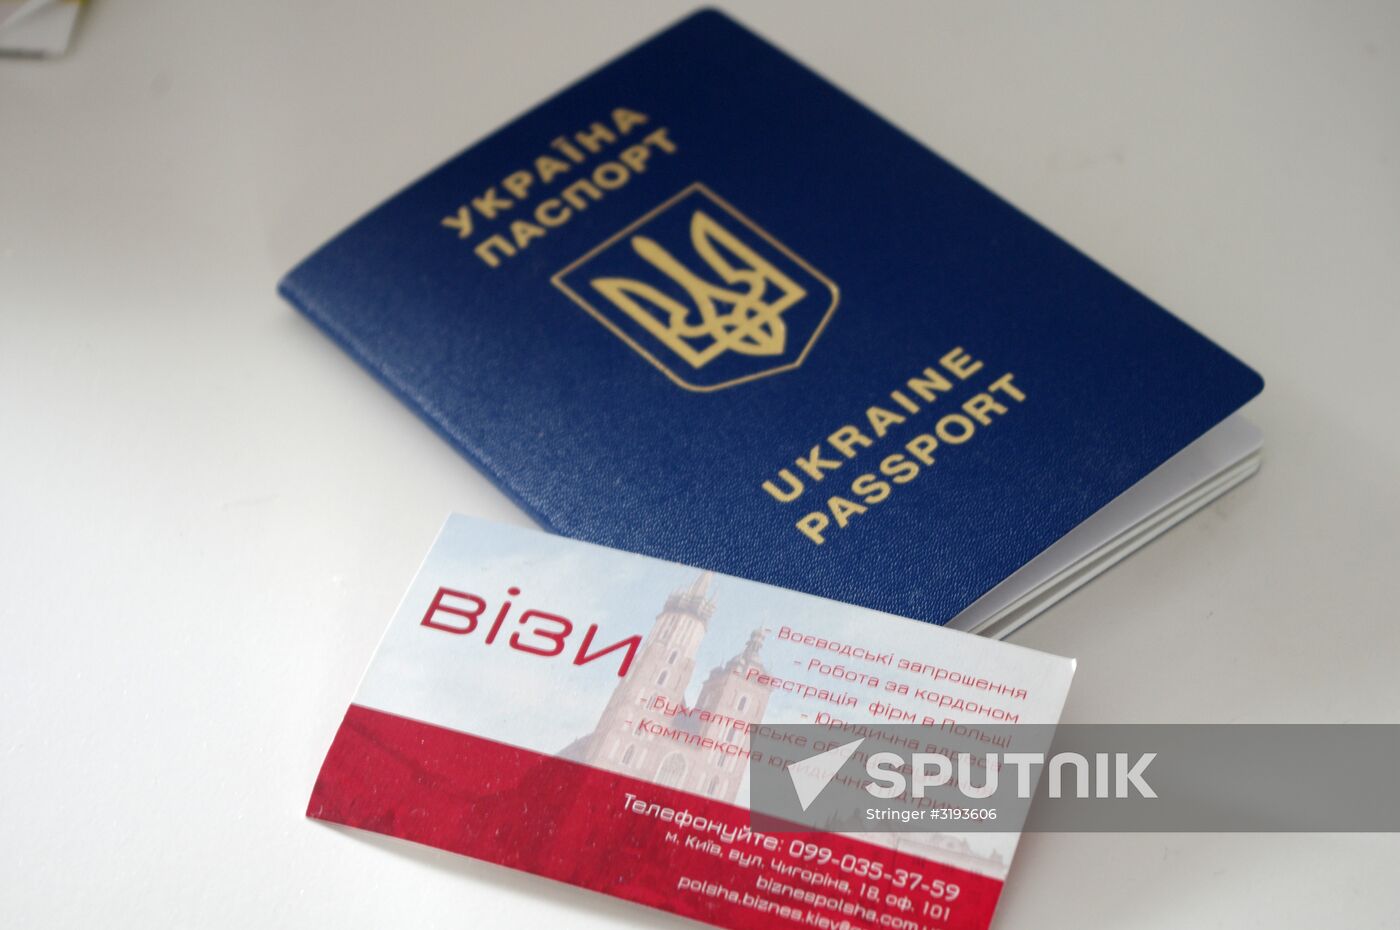 Ukranian passport